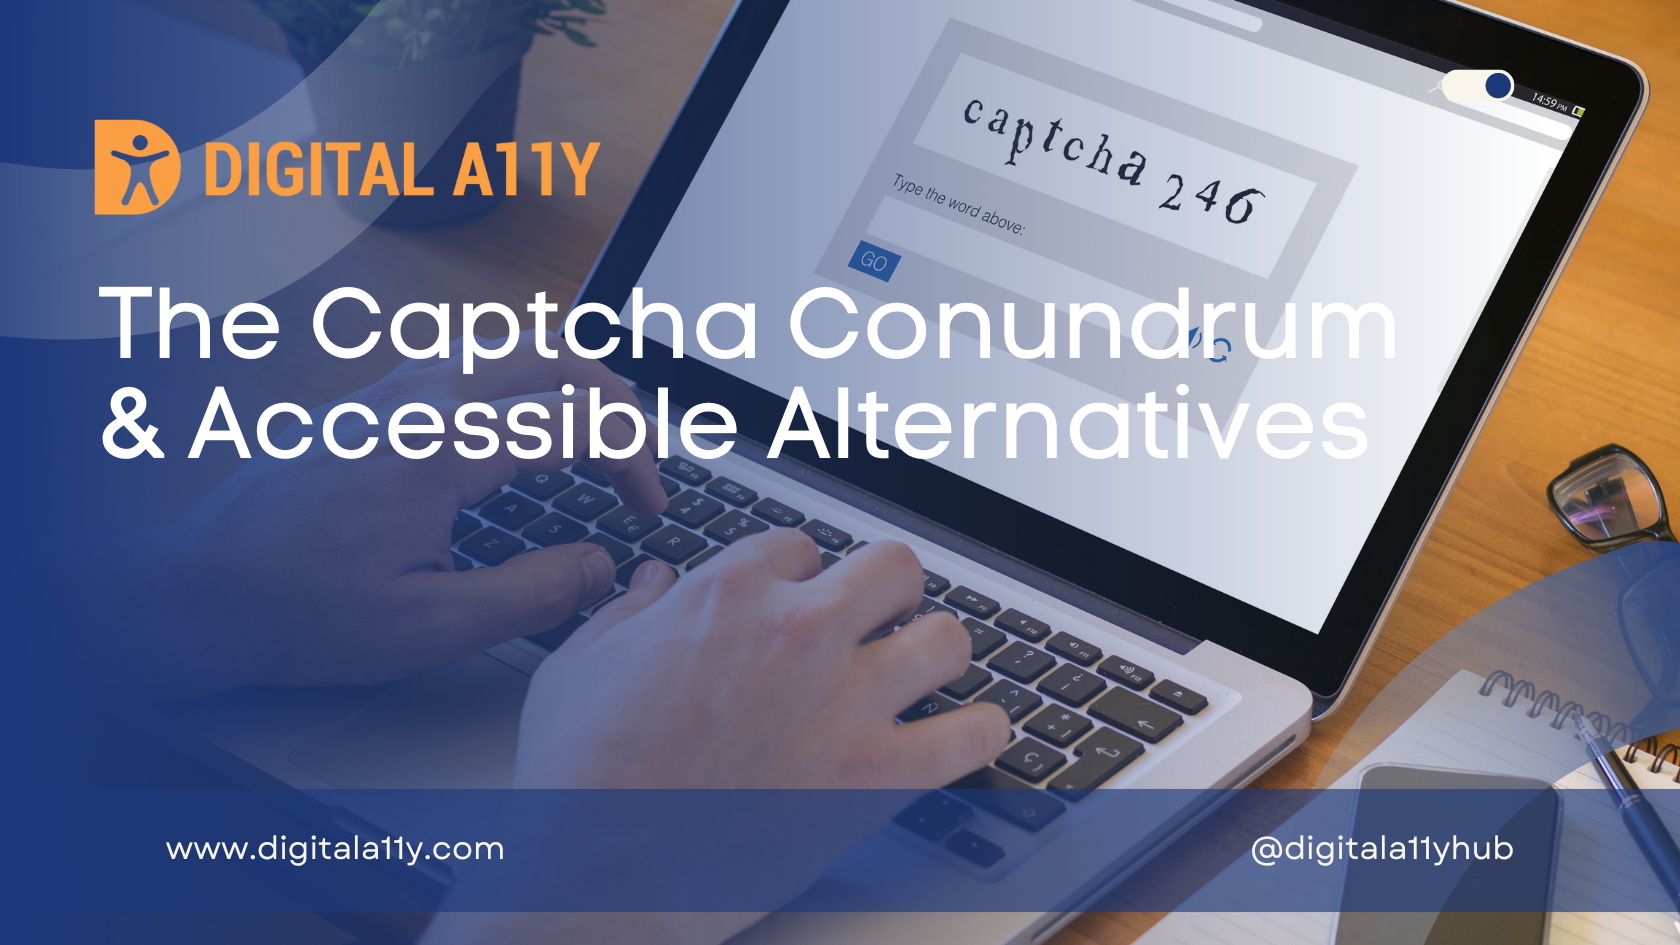 The Captcha Conundrum & Accessible Alternatives